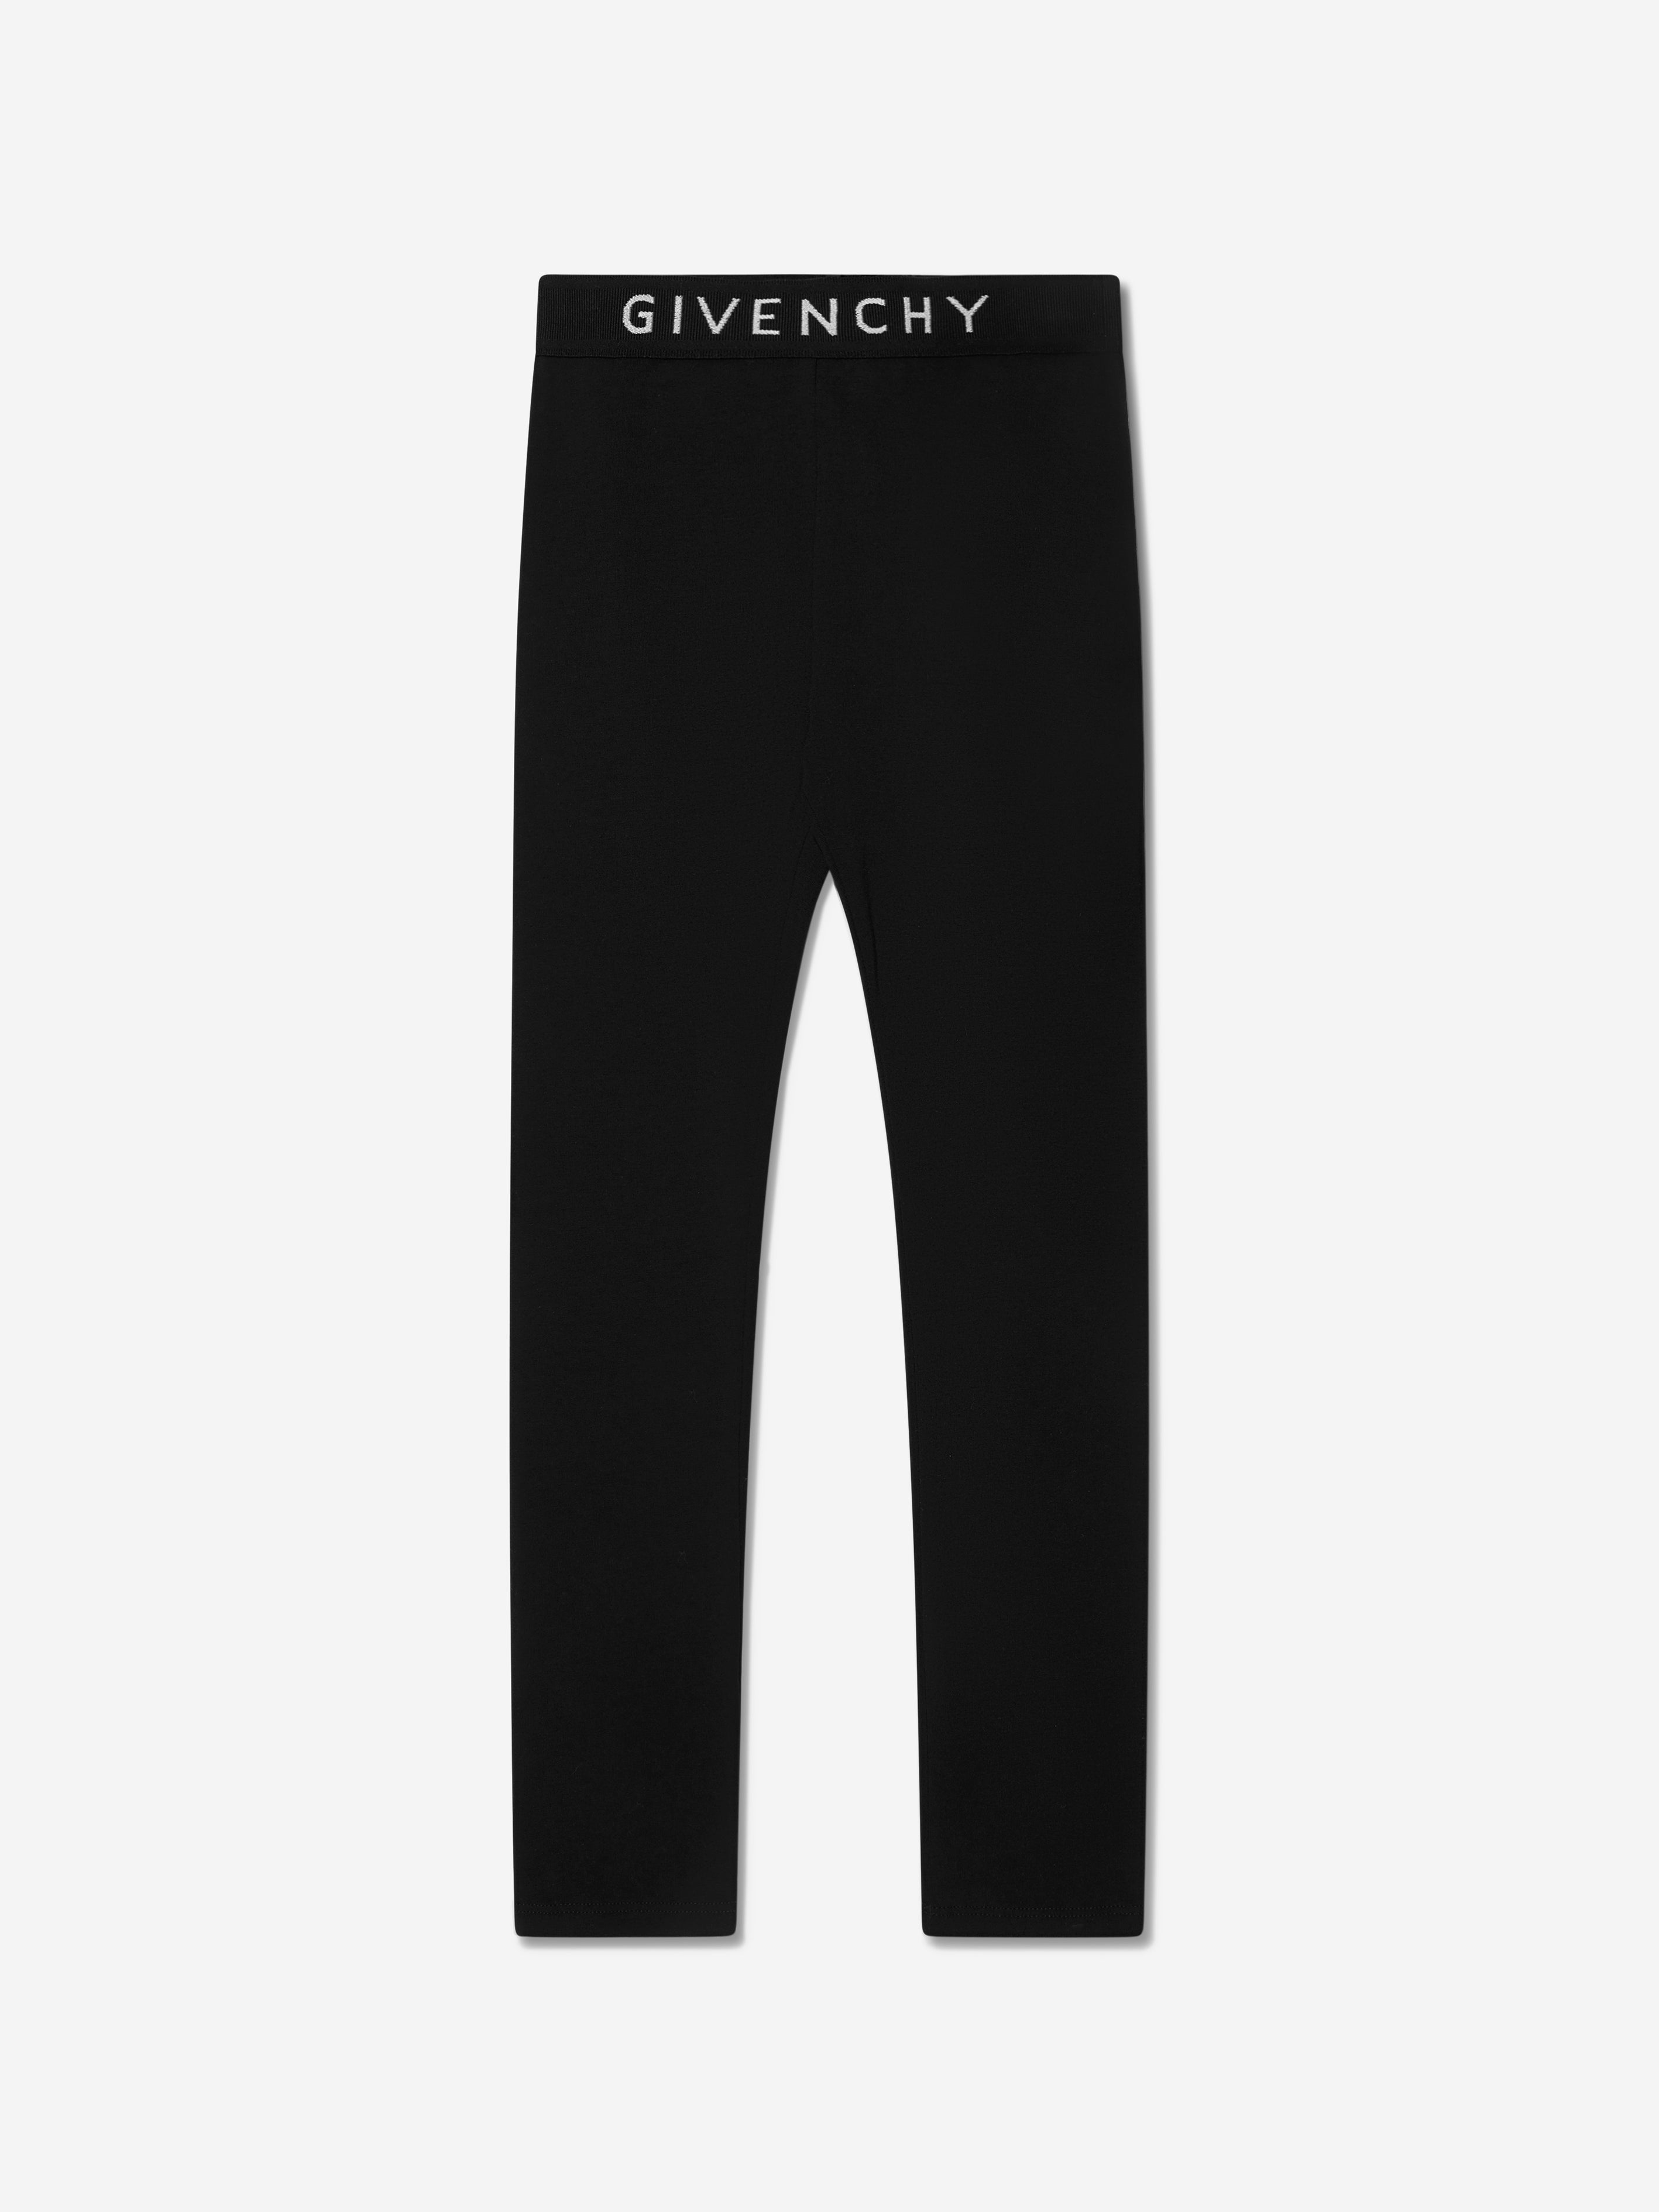 Givenchy Women's Leggings